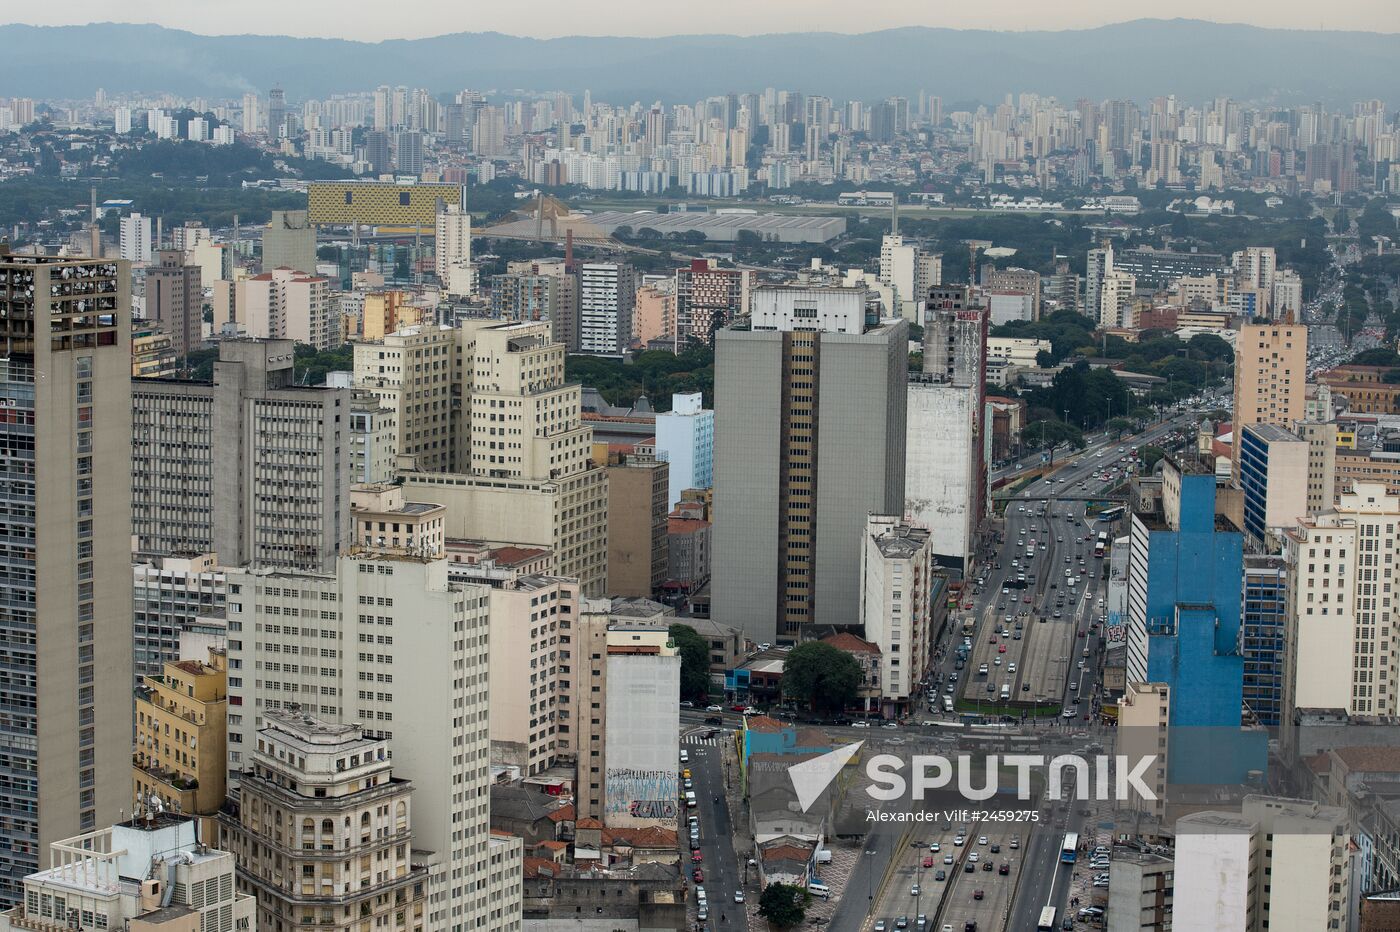 Cities of the world. Sao Paulo